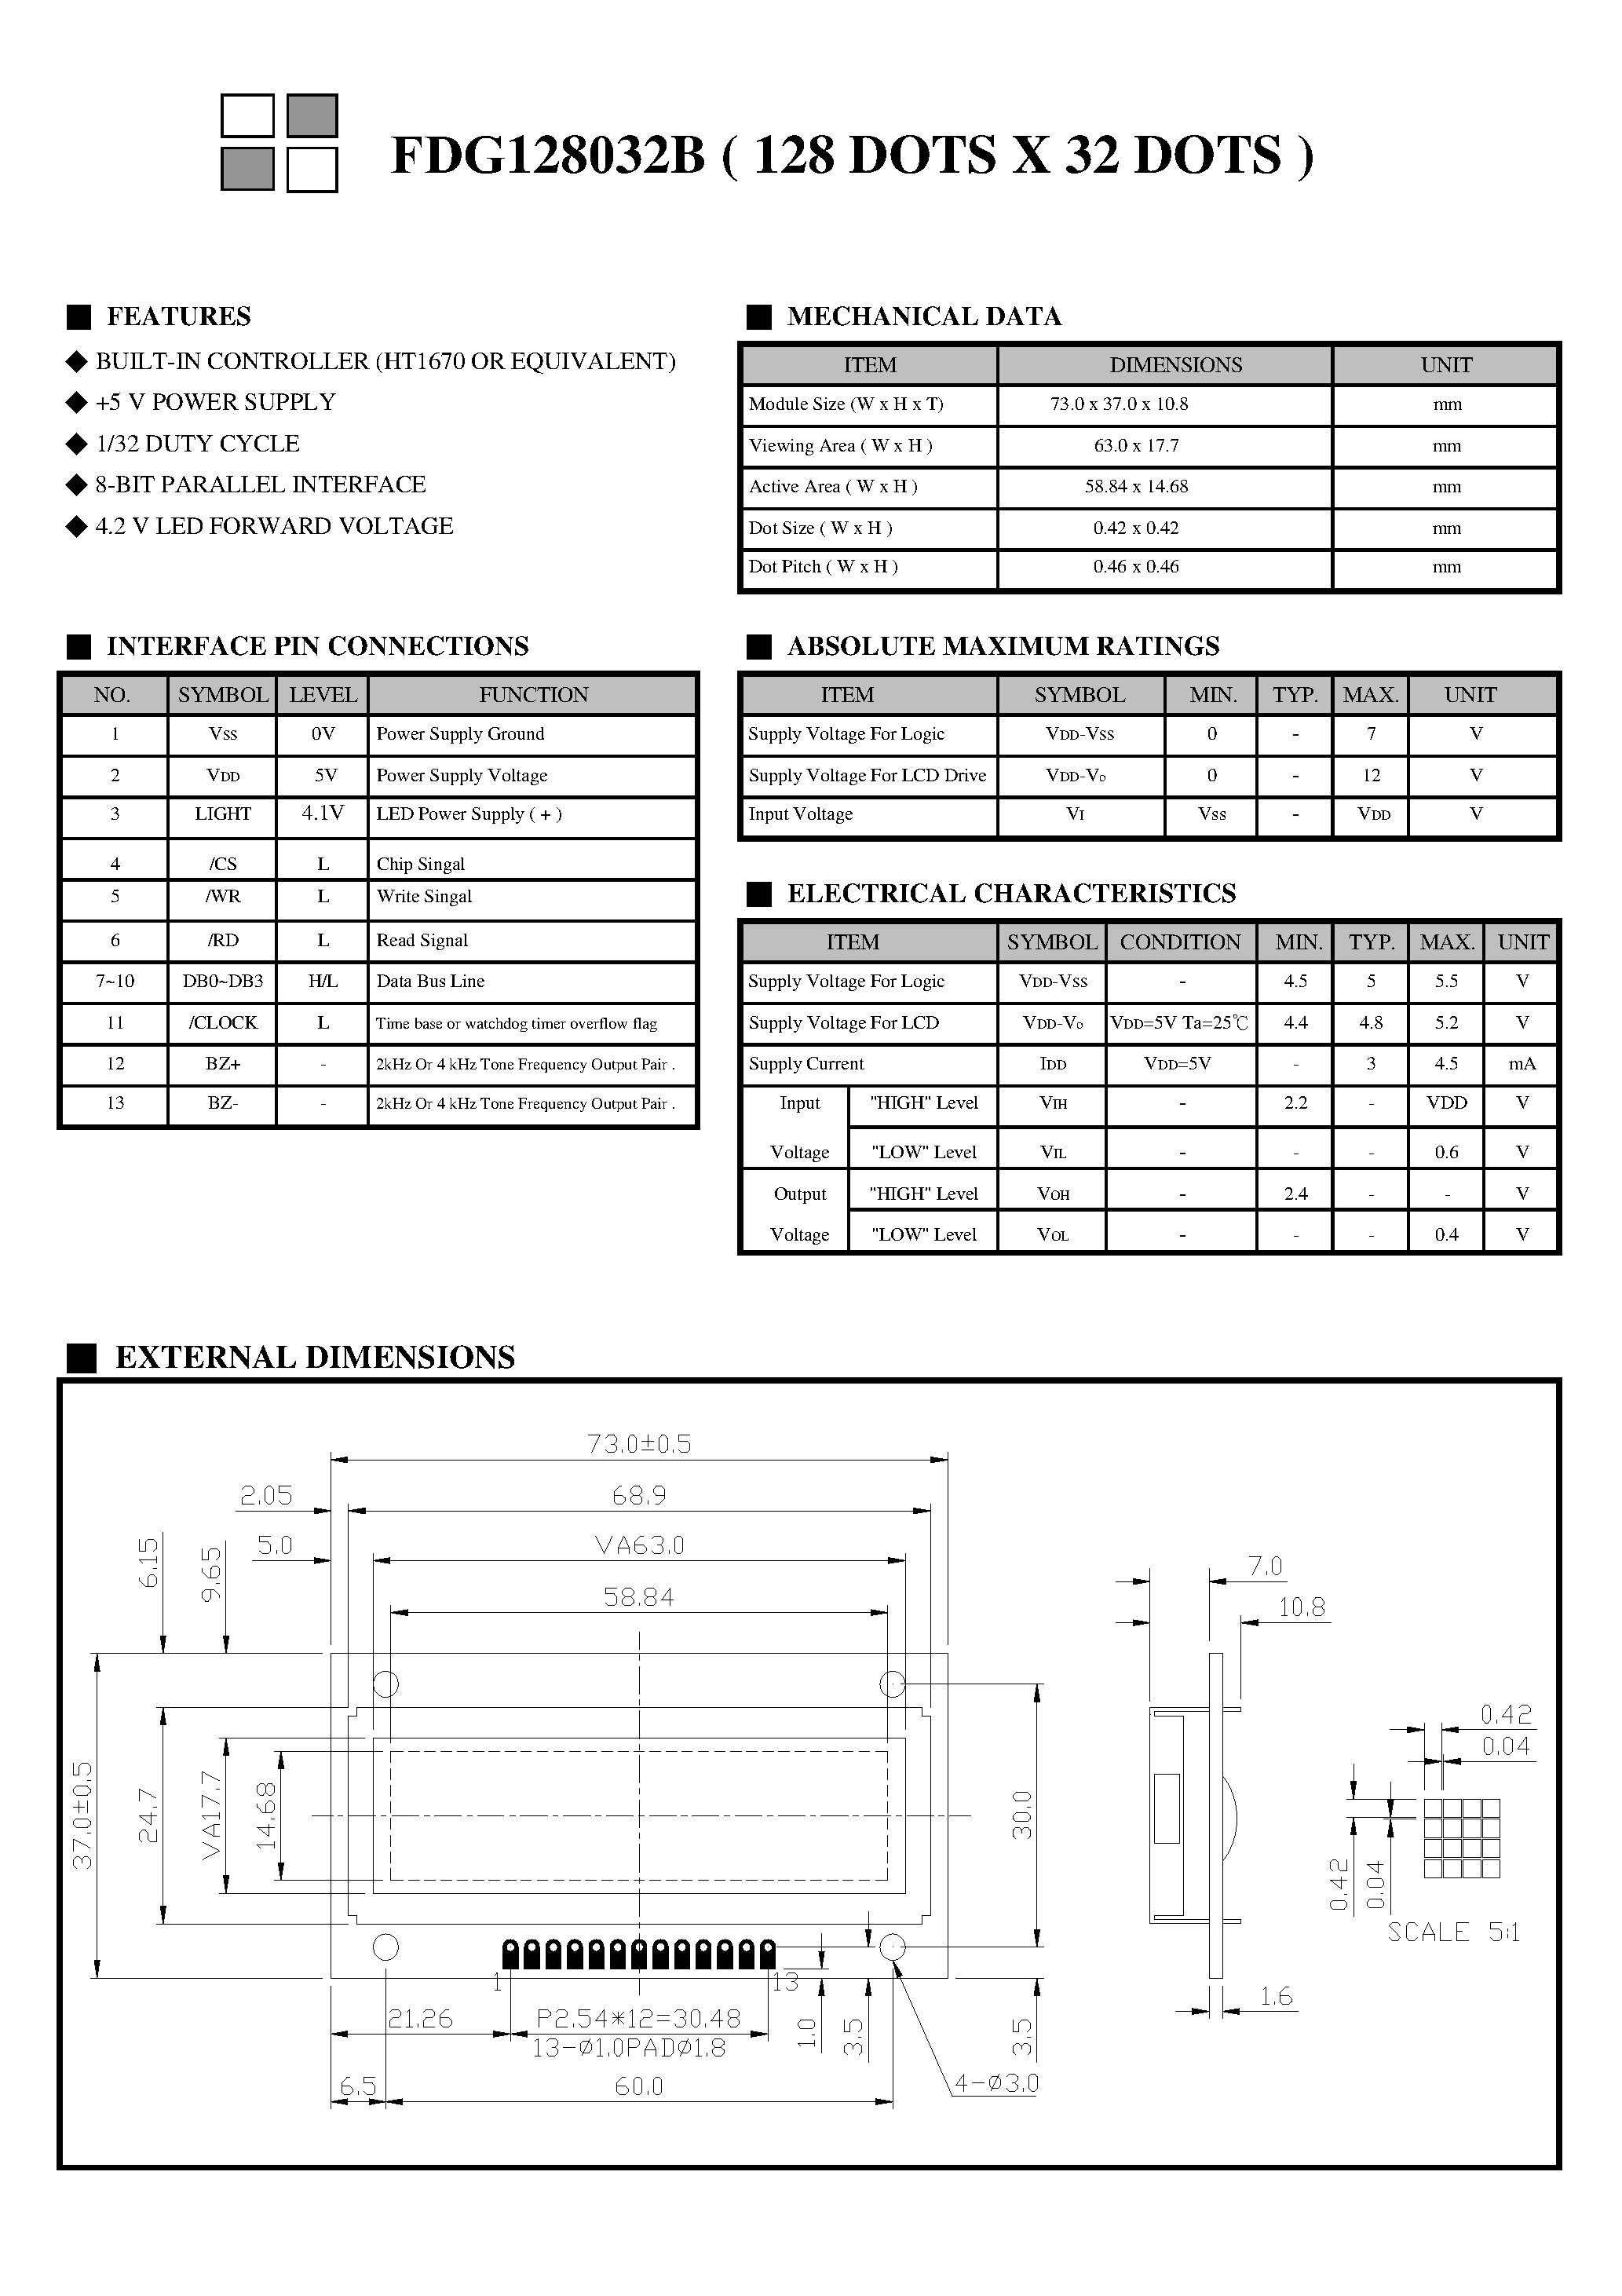 Datasheet FDG128032B - Monochrome Lcd Module page 2